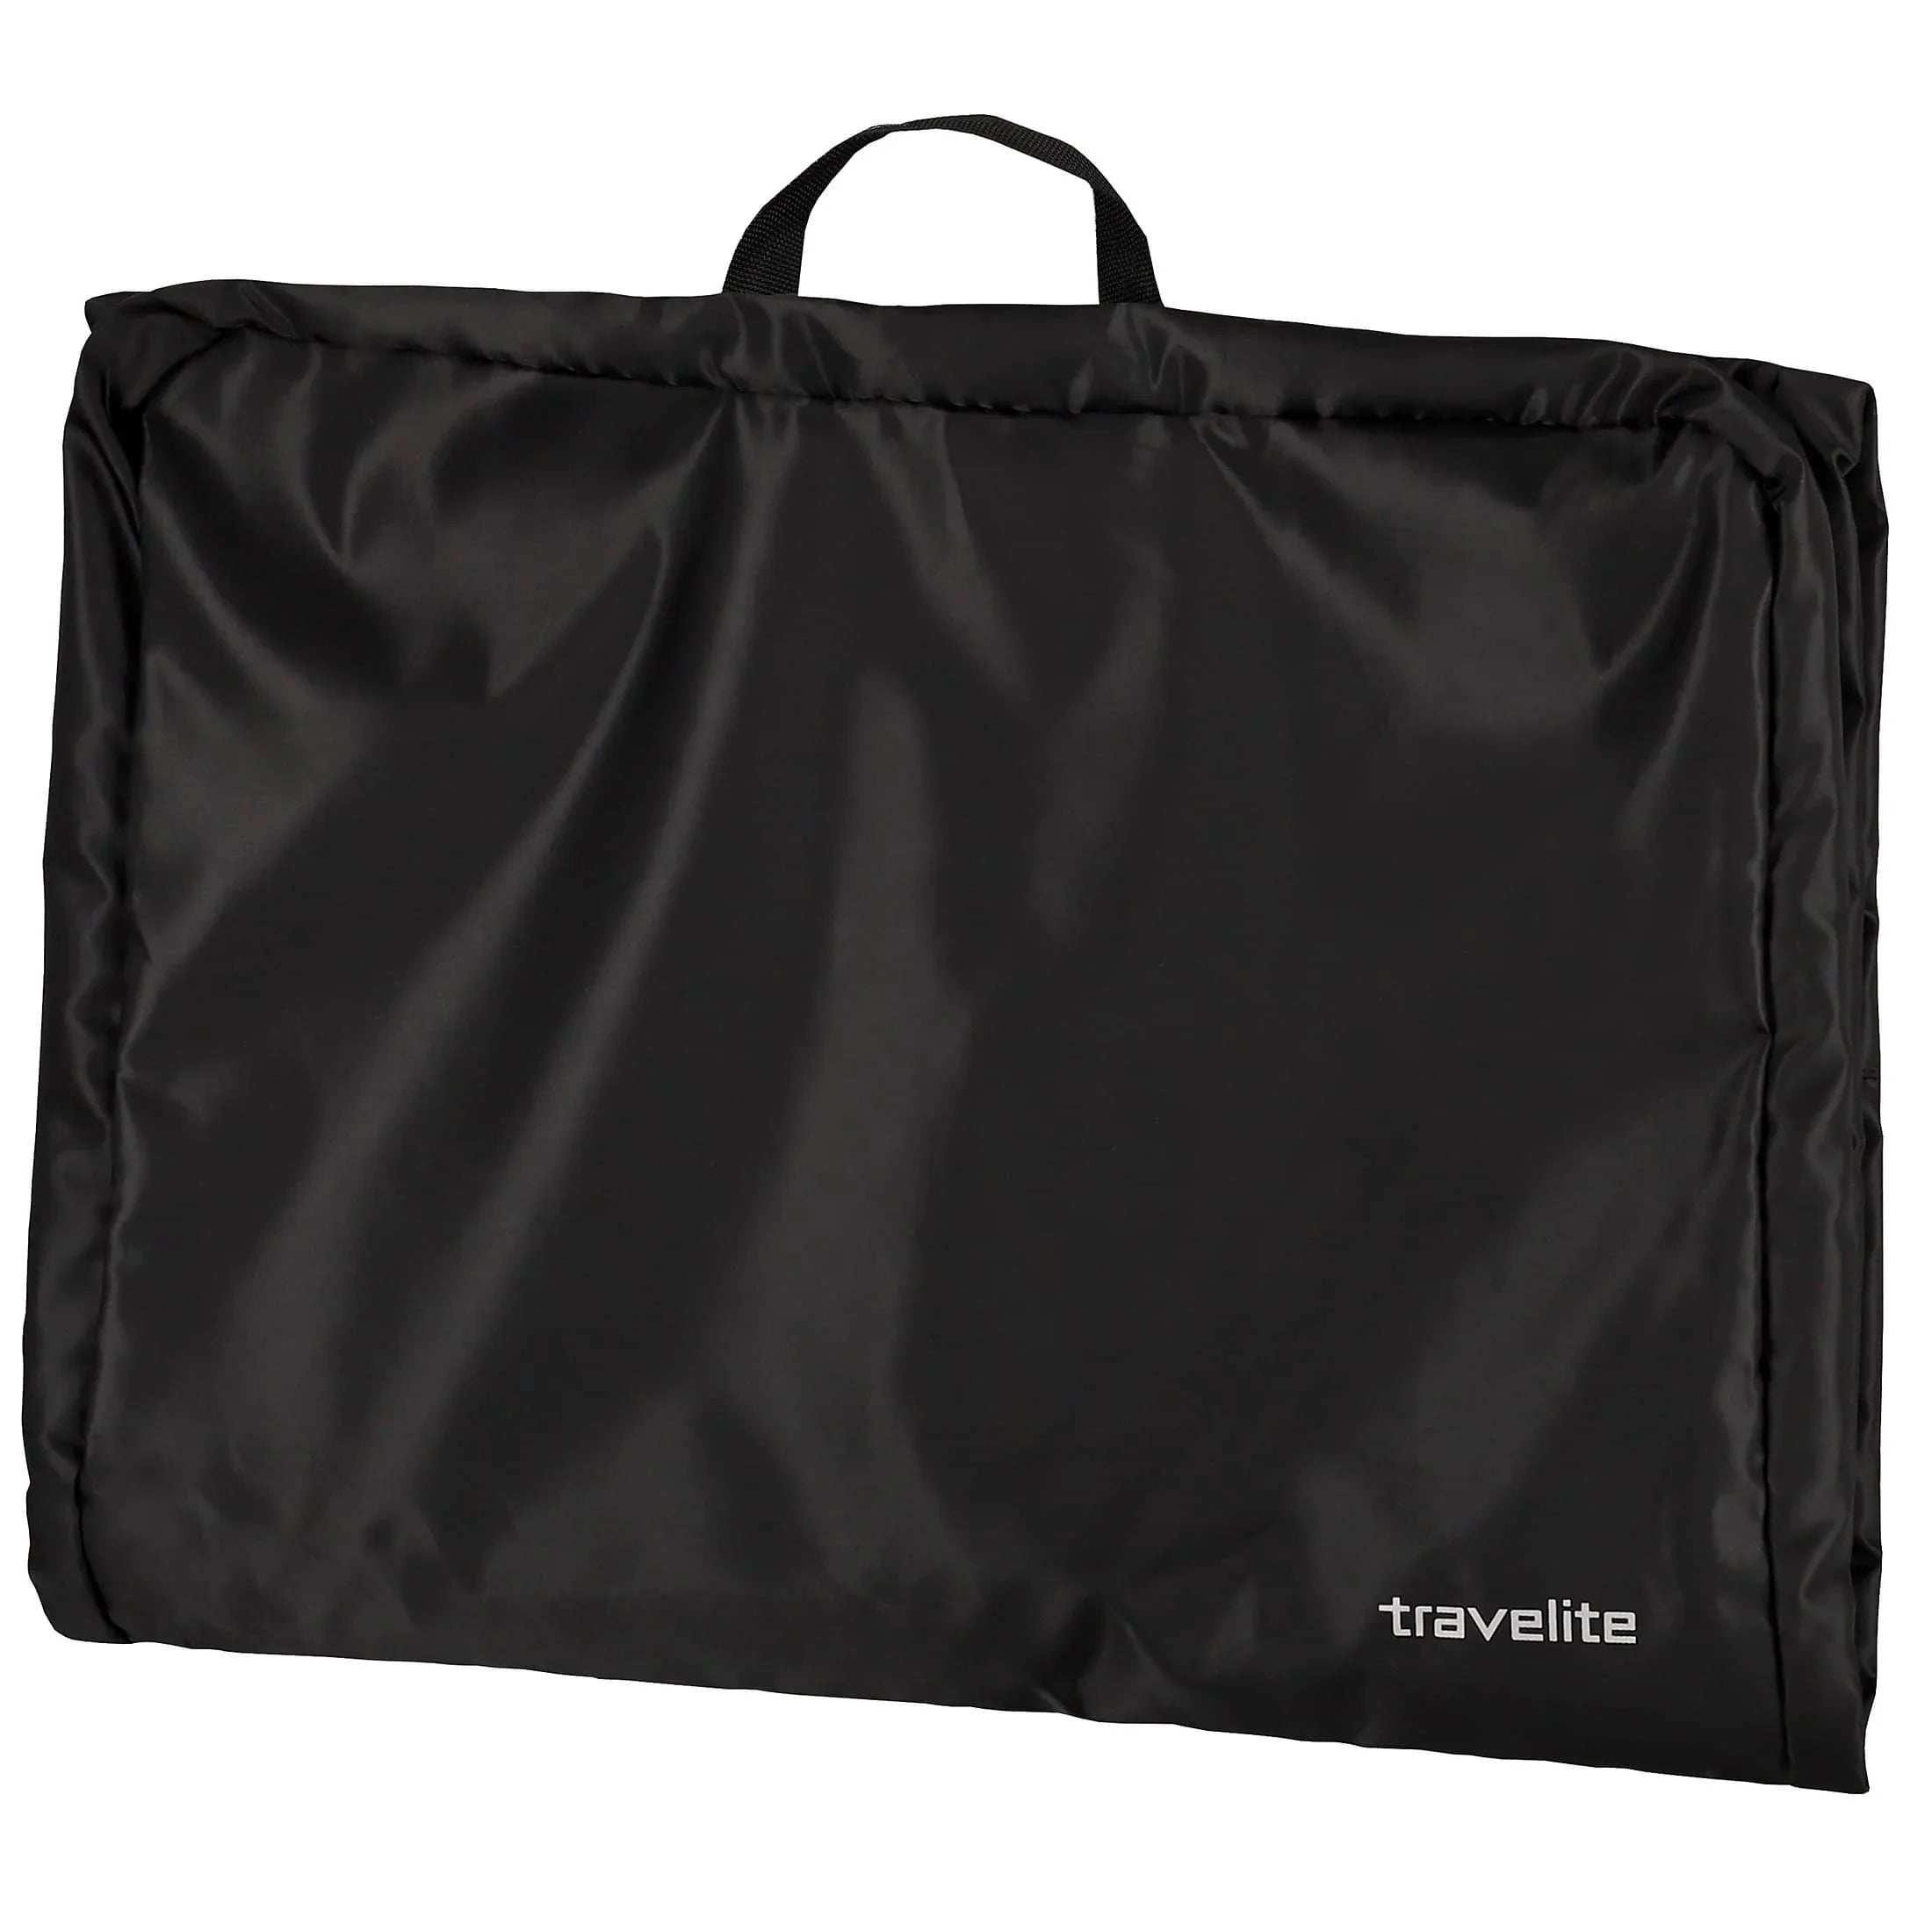 Travelite Accessories garment bag M - black